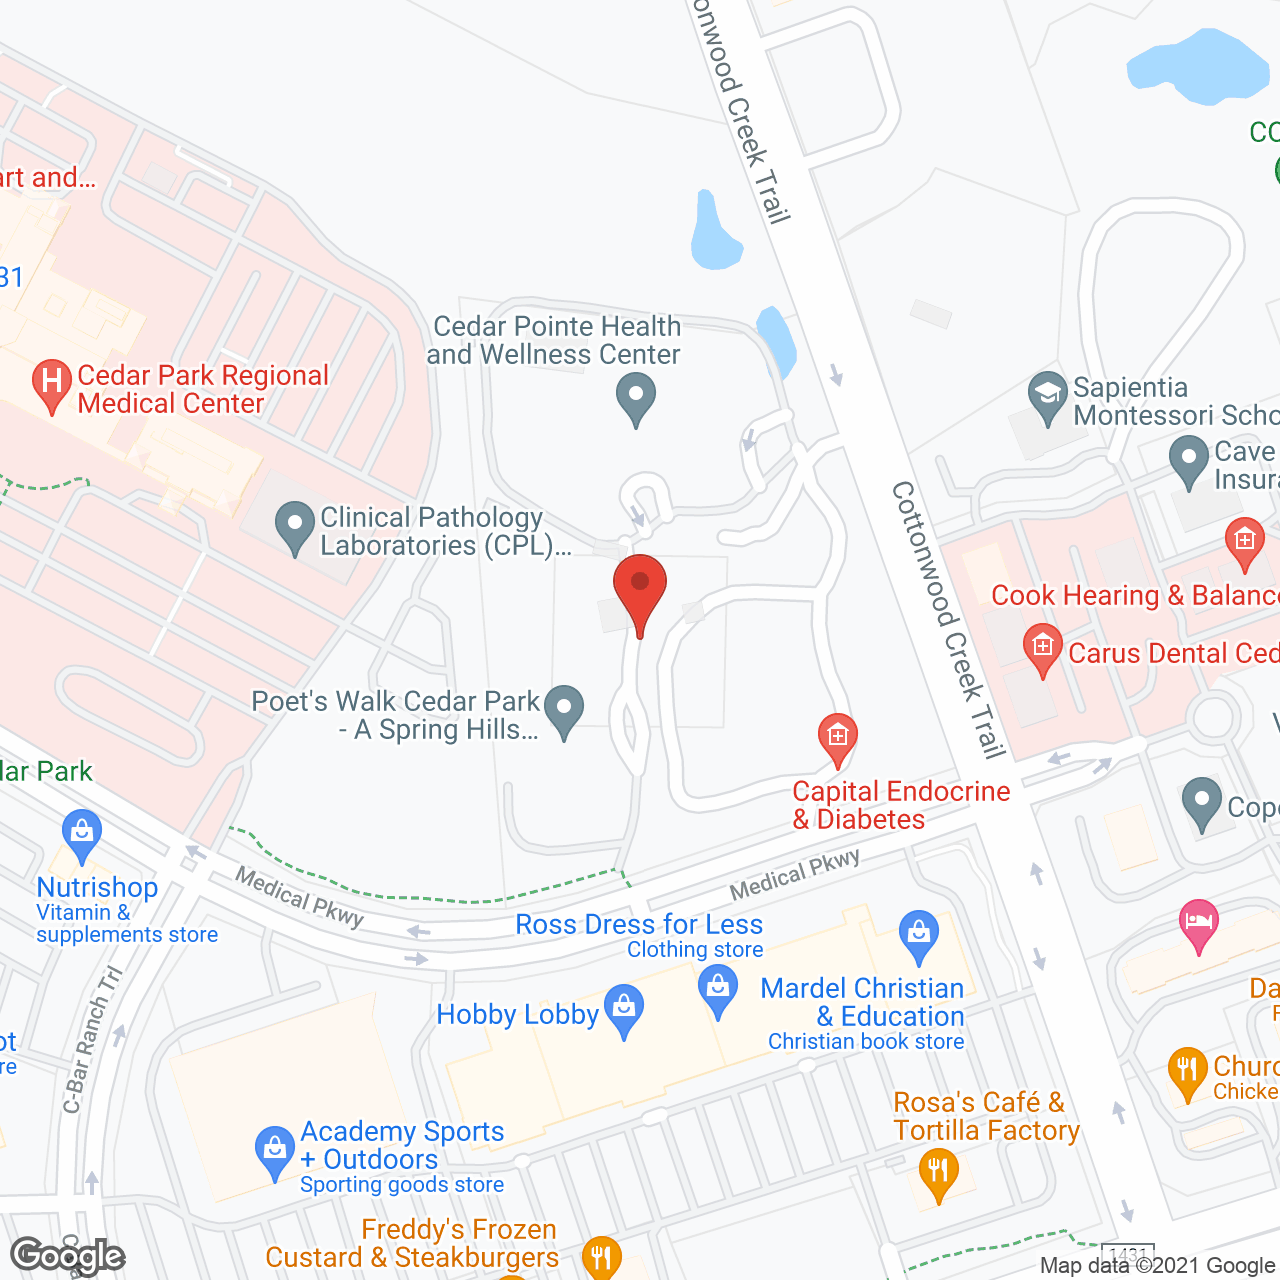 Poet's Walk Cedar Park in google map